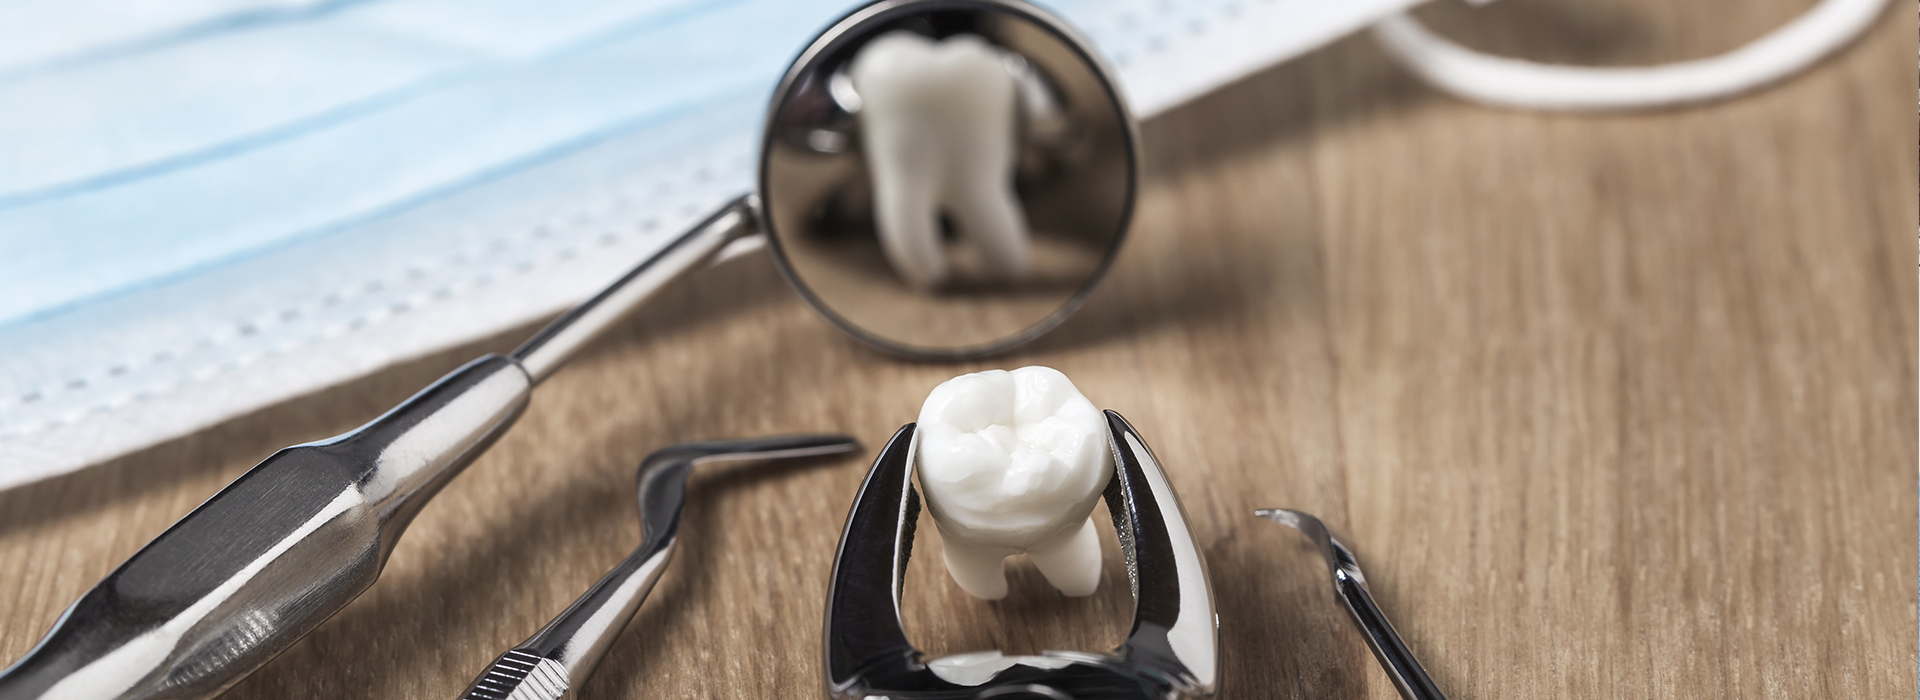 1Smile Dental | Sedation Dentistry, All-on-6 reg  and Braces